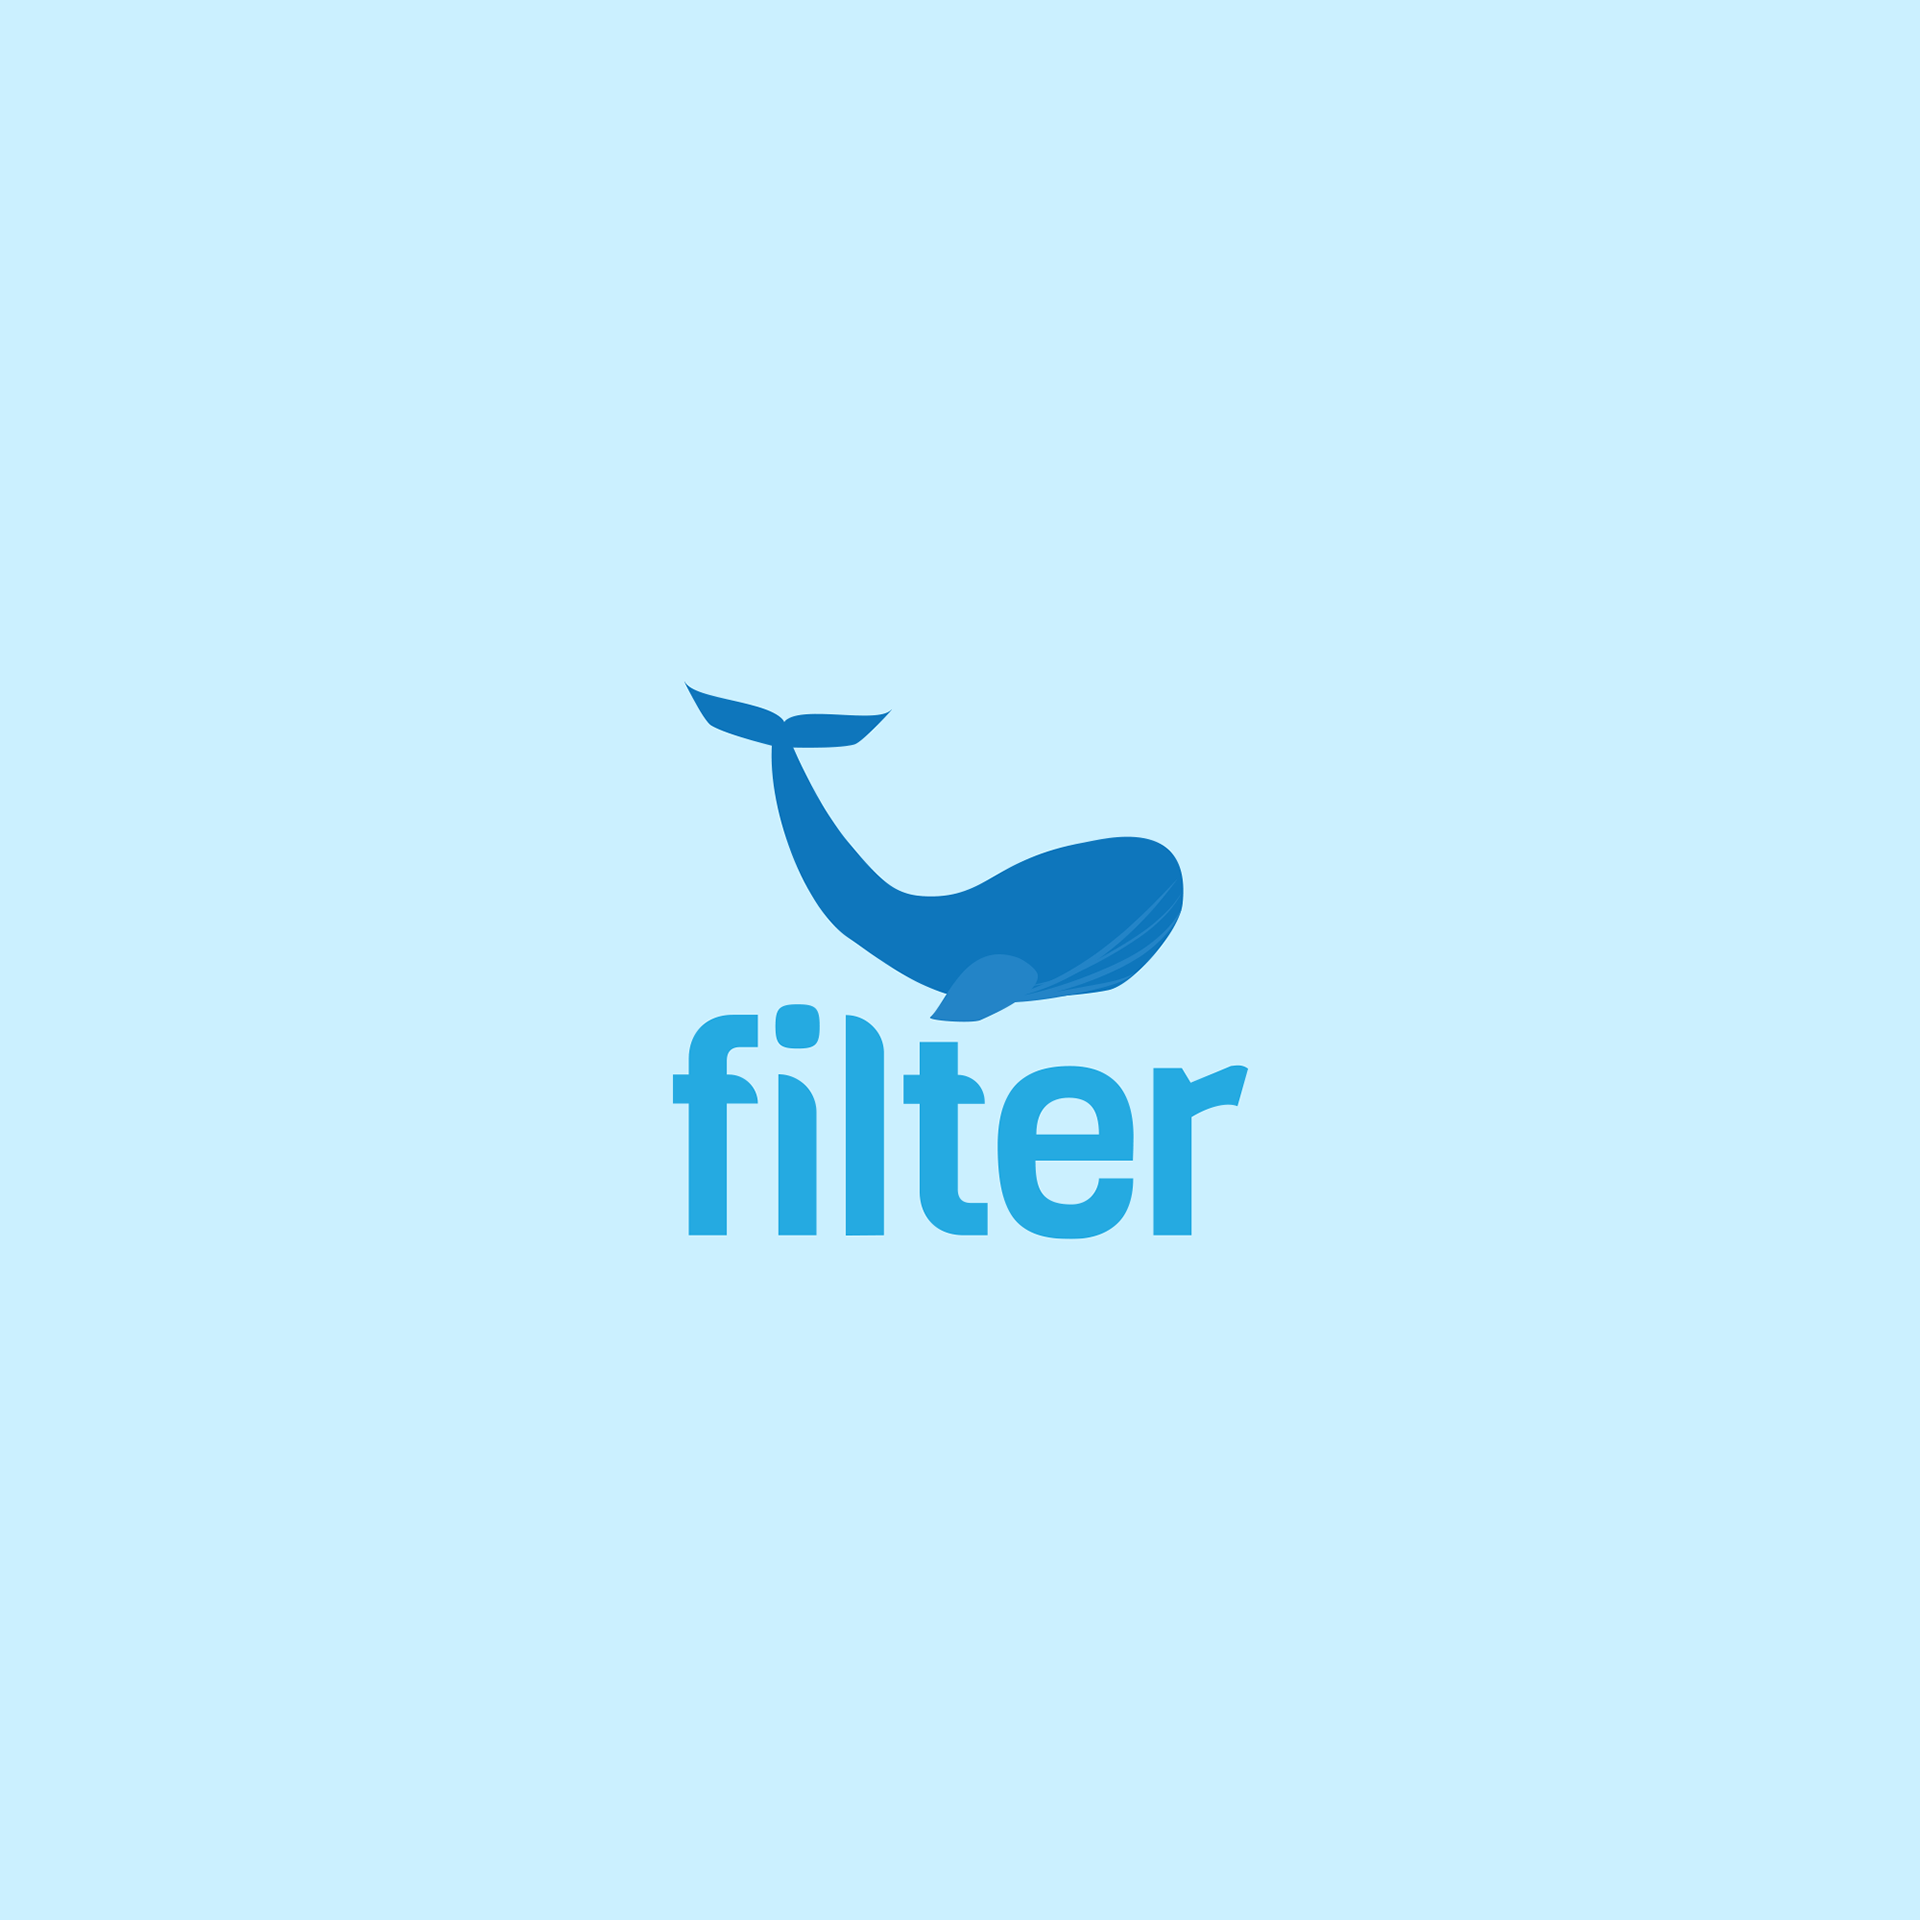 Filter Logo - Chase Smallwood - Filter Logo Concept